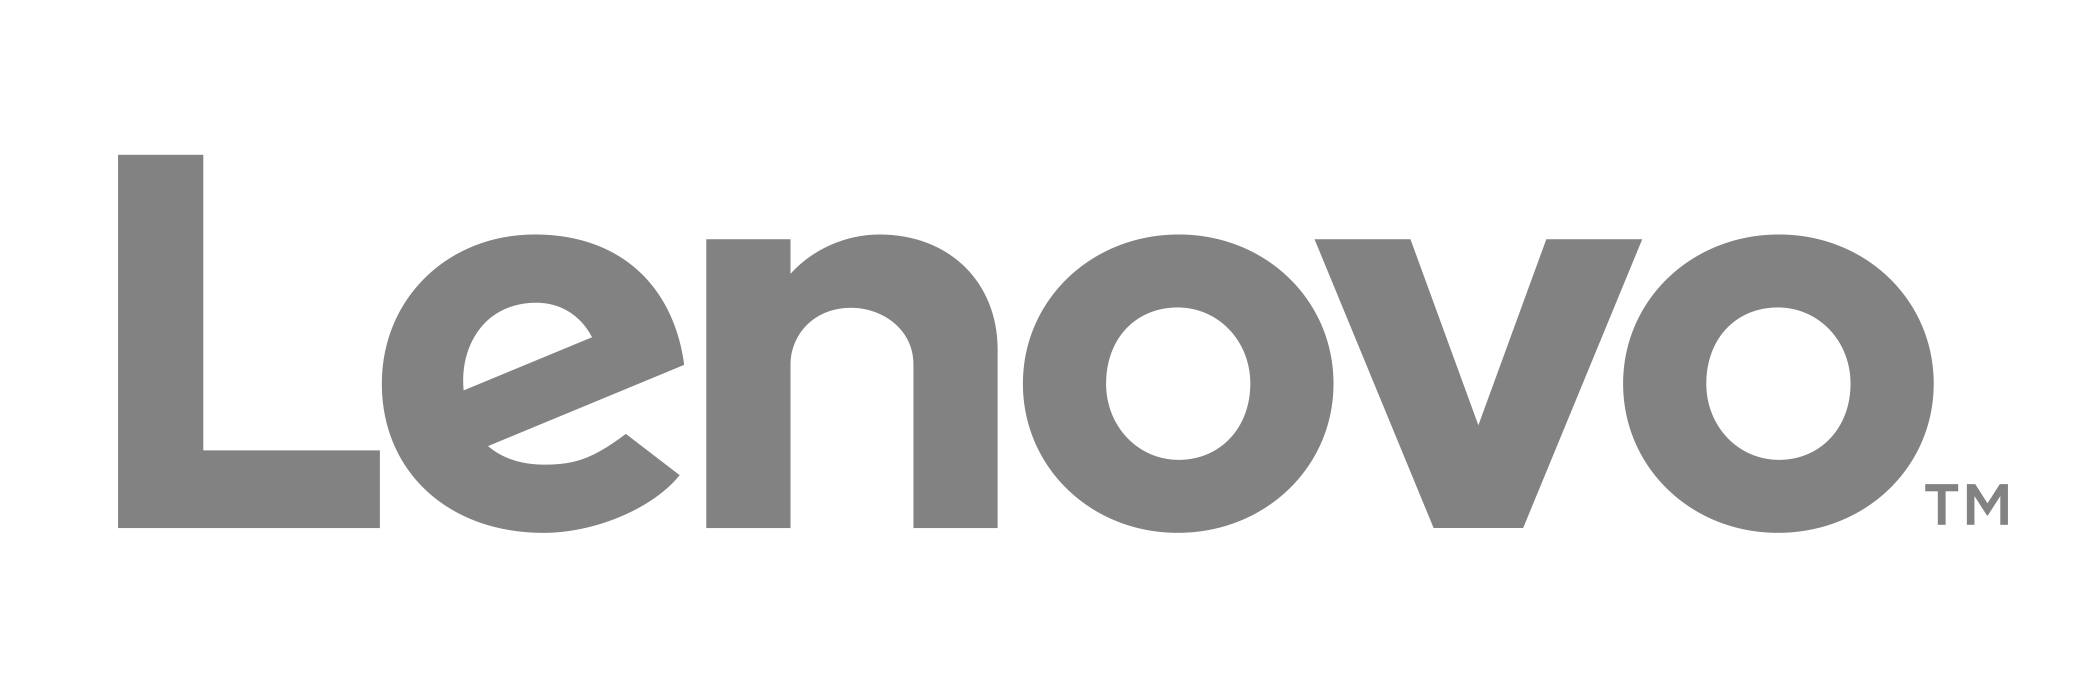 lenovo_logo.png